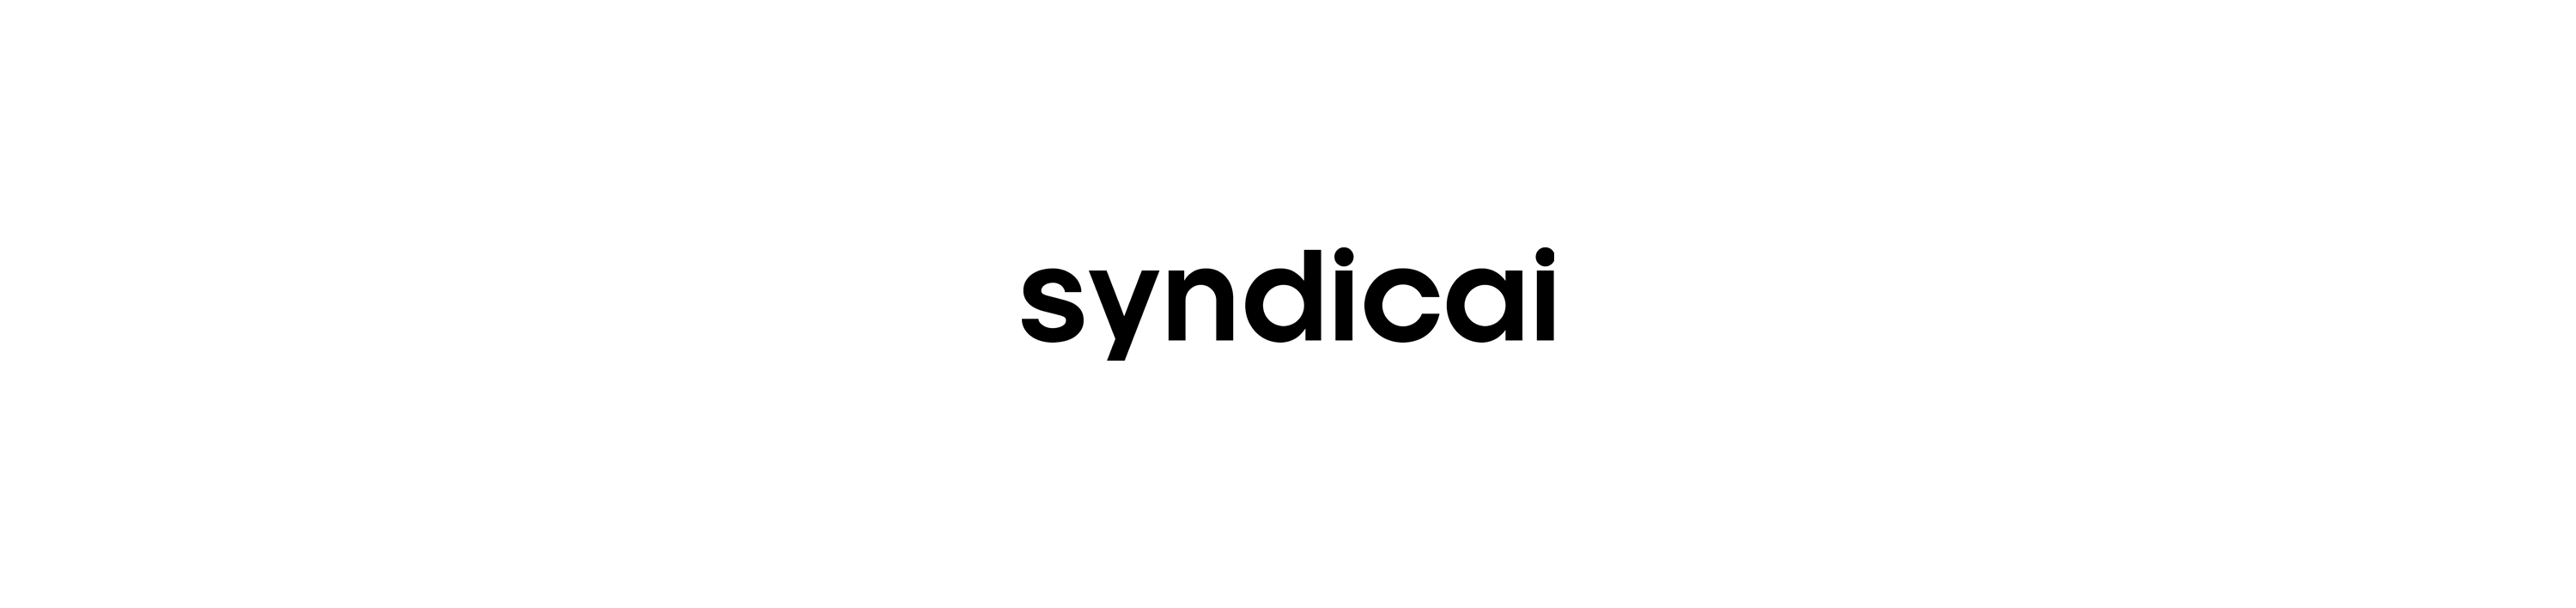 syndicai-logo